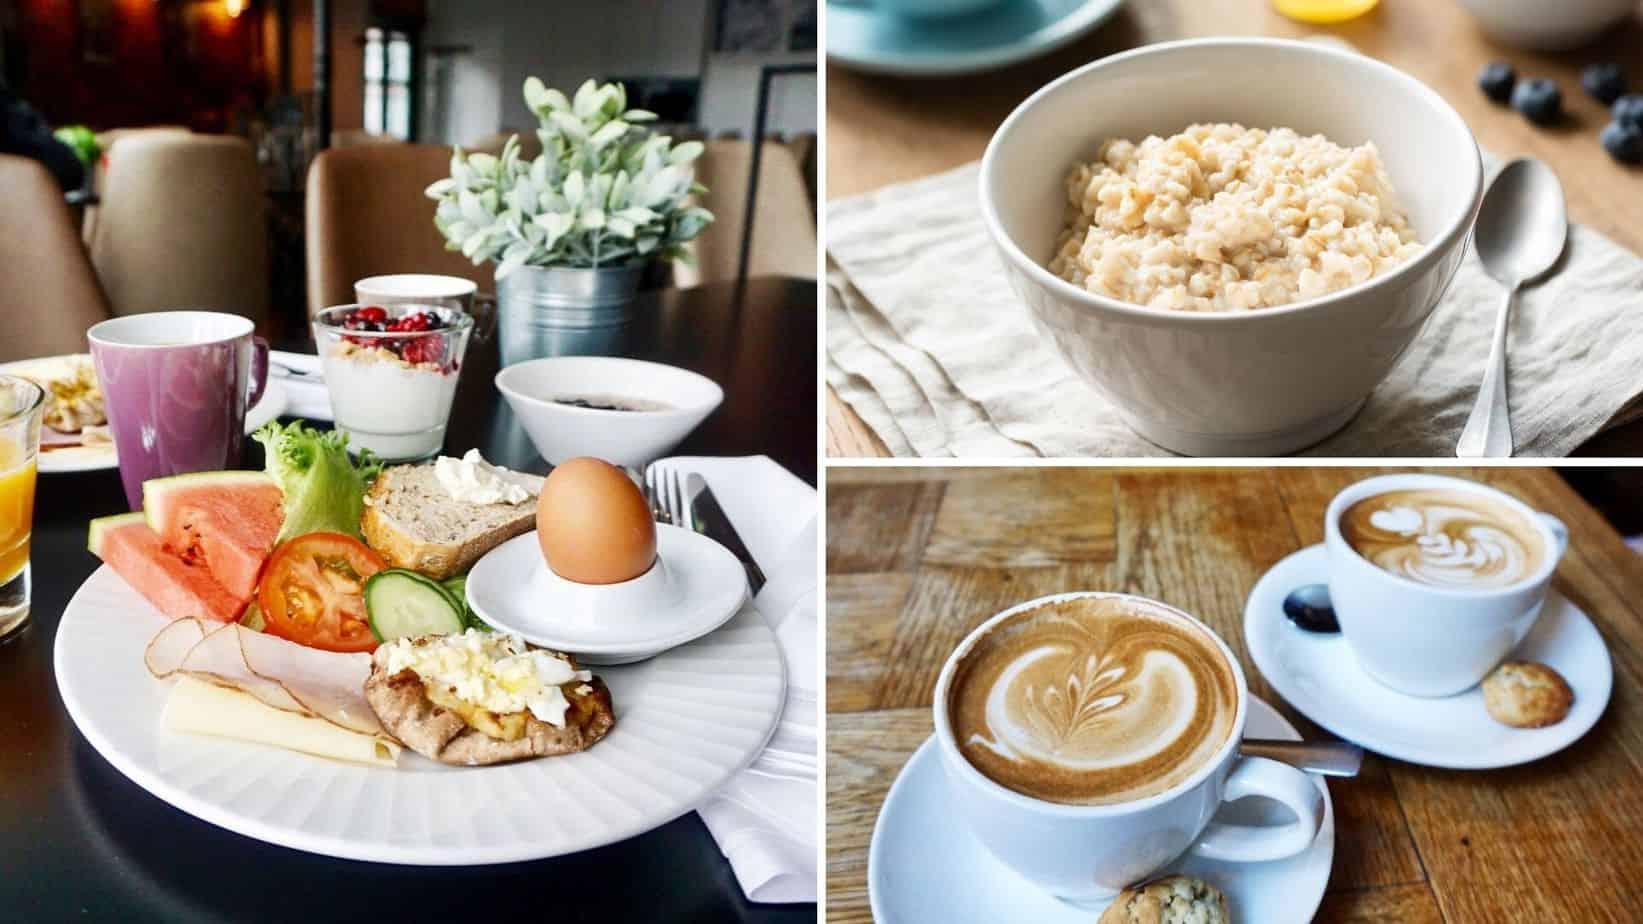 porridge, boiled eggs, Finnish rice pie, coffee, and breakfast foods on table